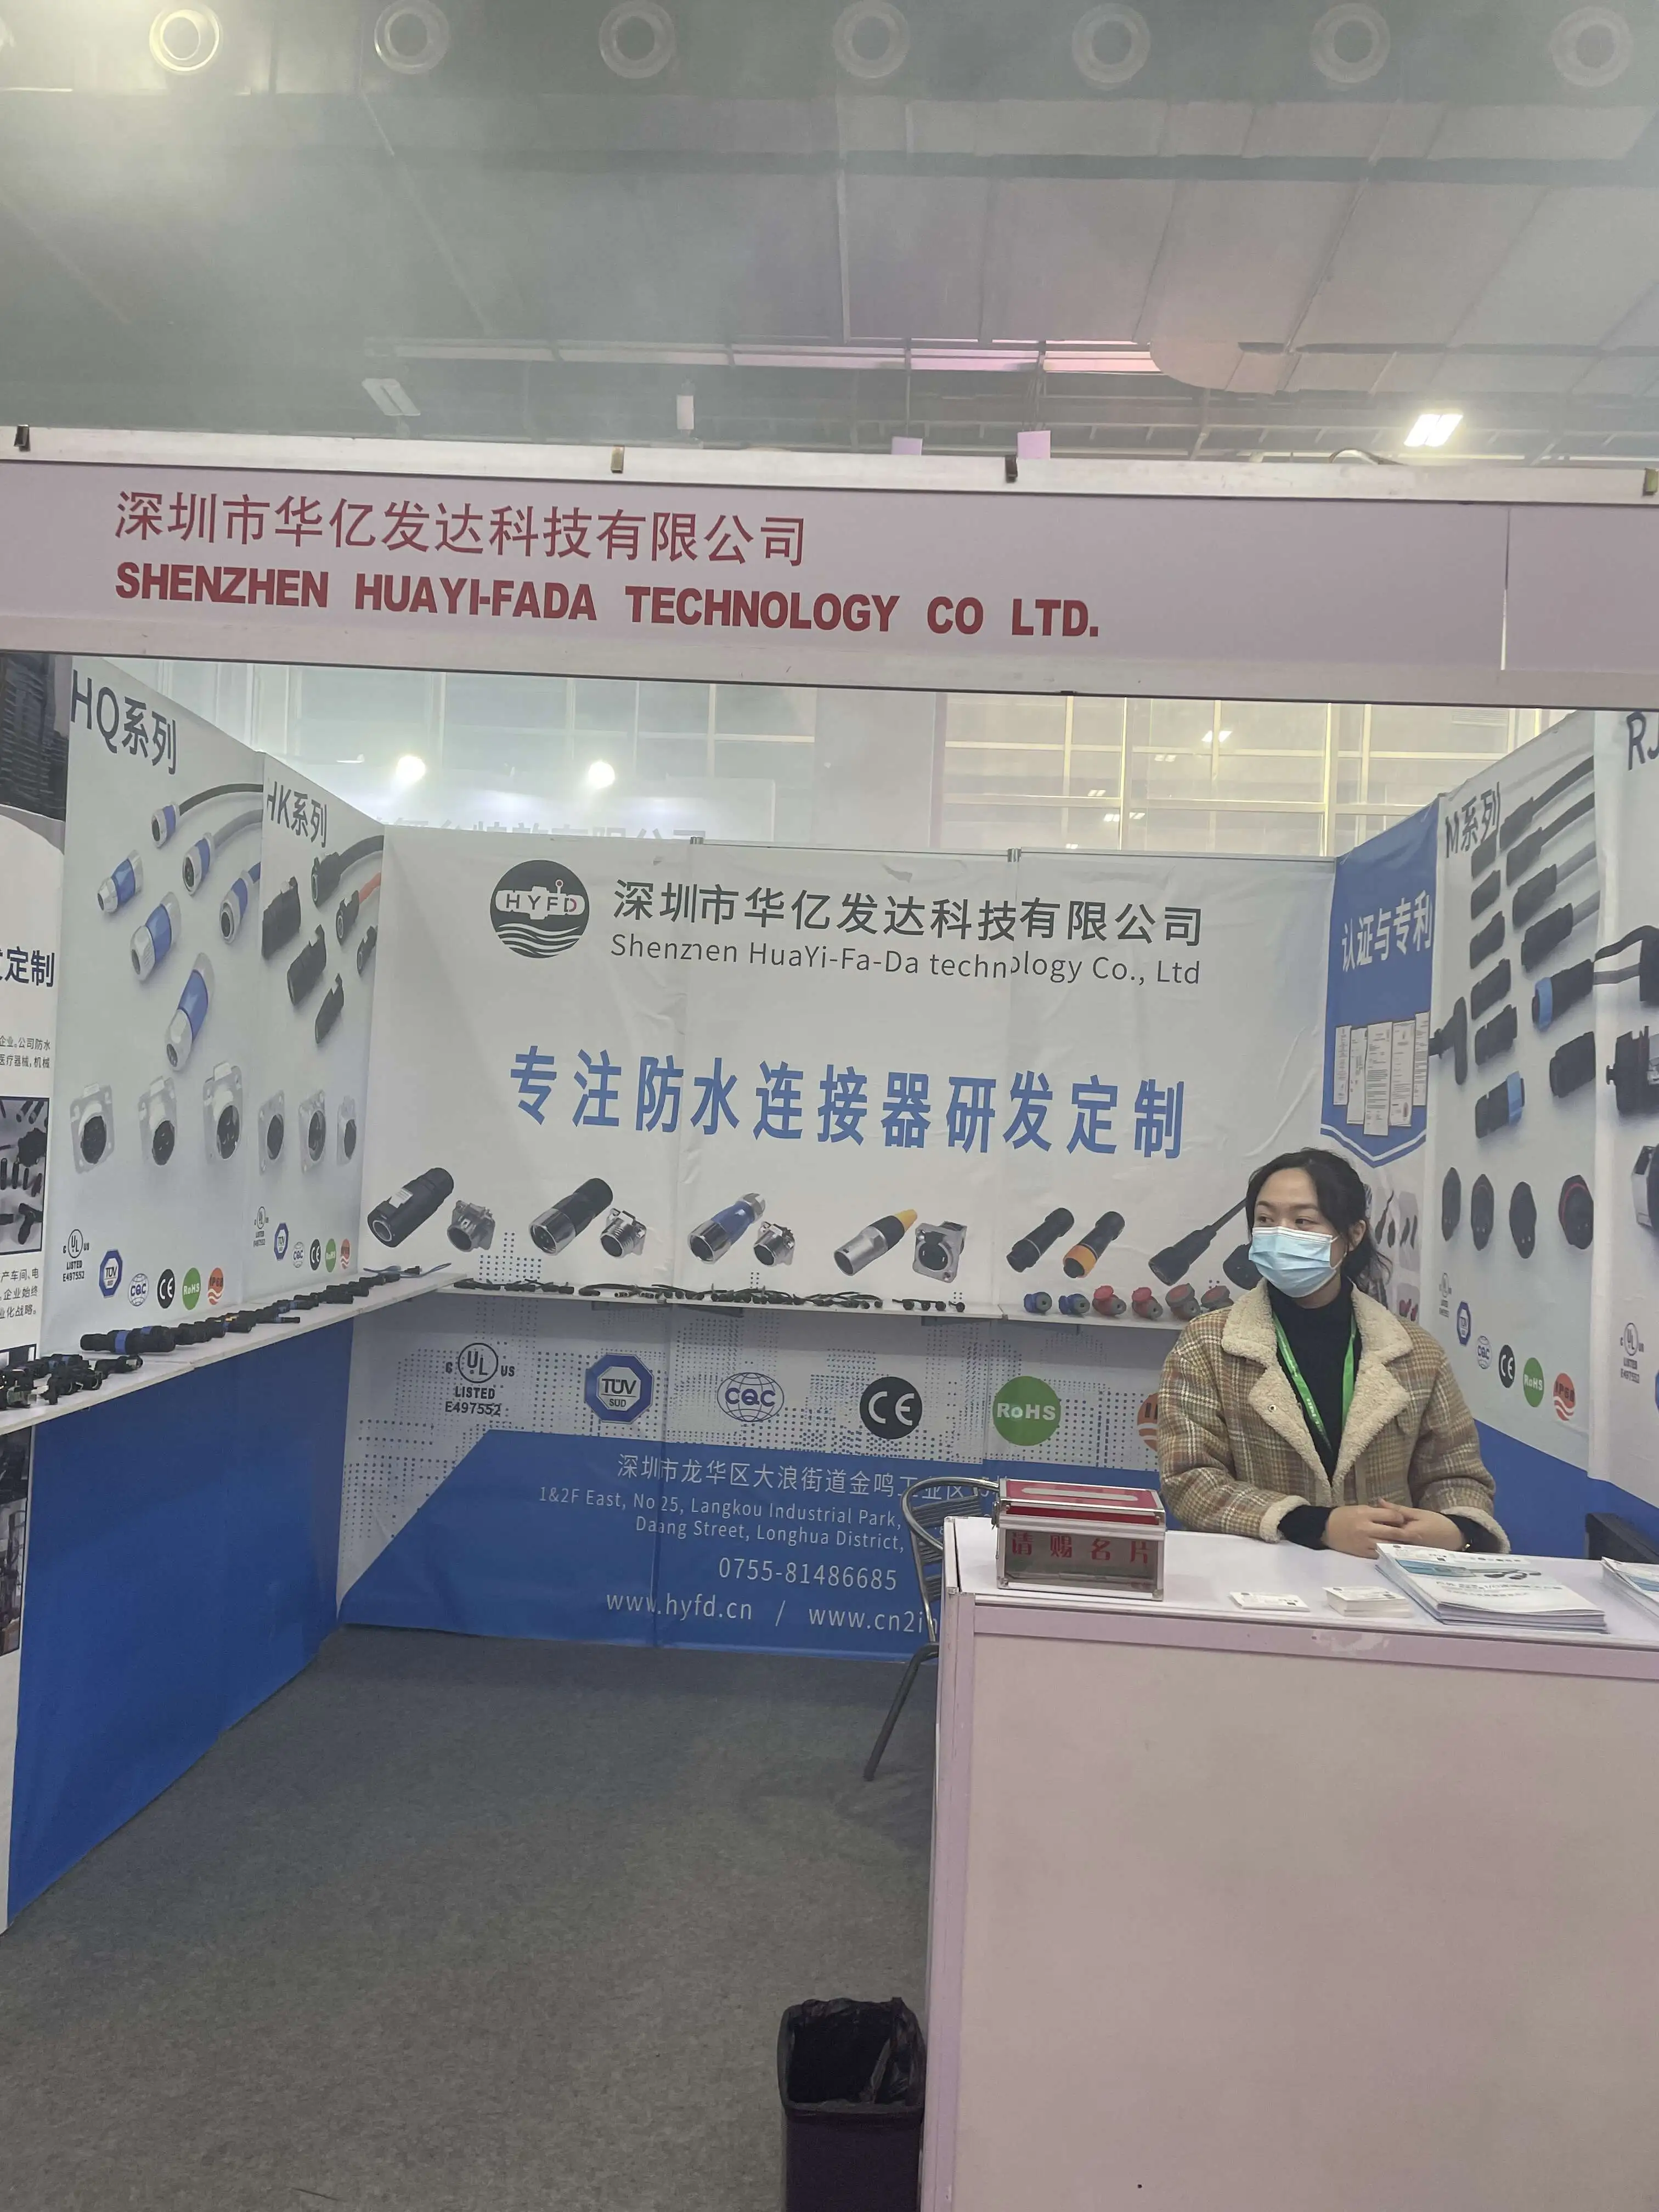 ShenZhen HuaYi-FaDa Technology CO., Ltd.는 조명 박람회에 참가했습니다.